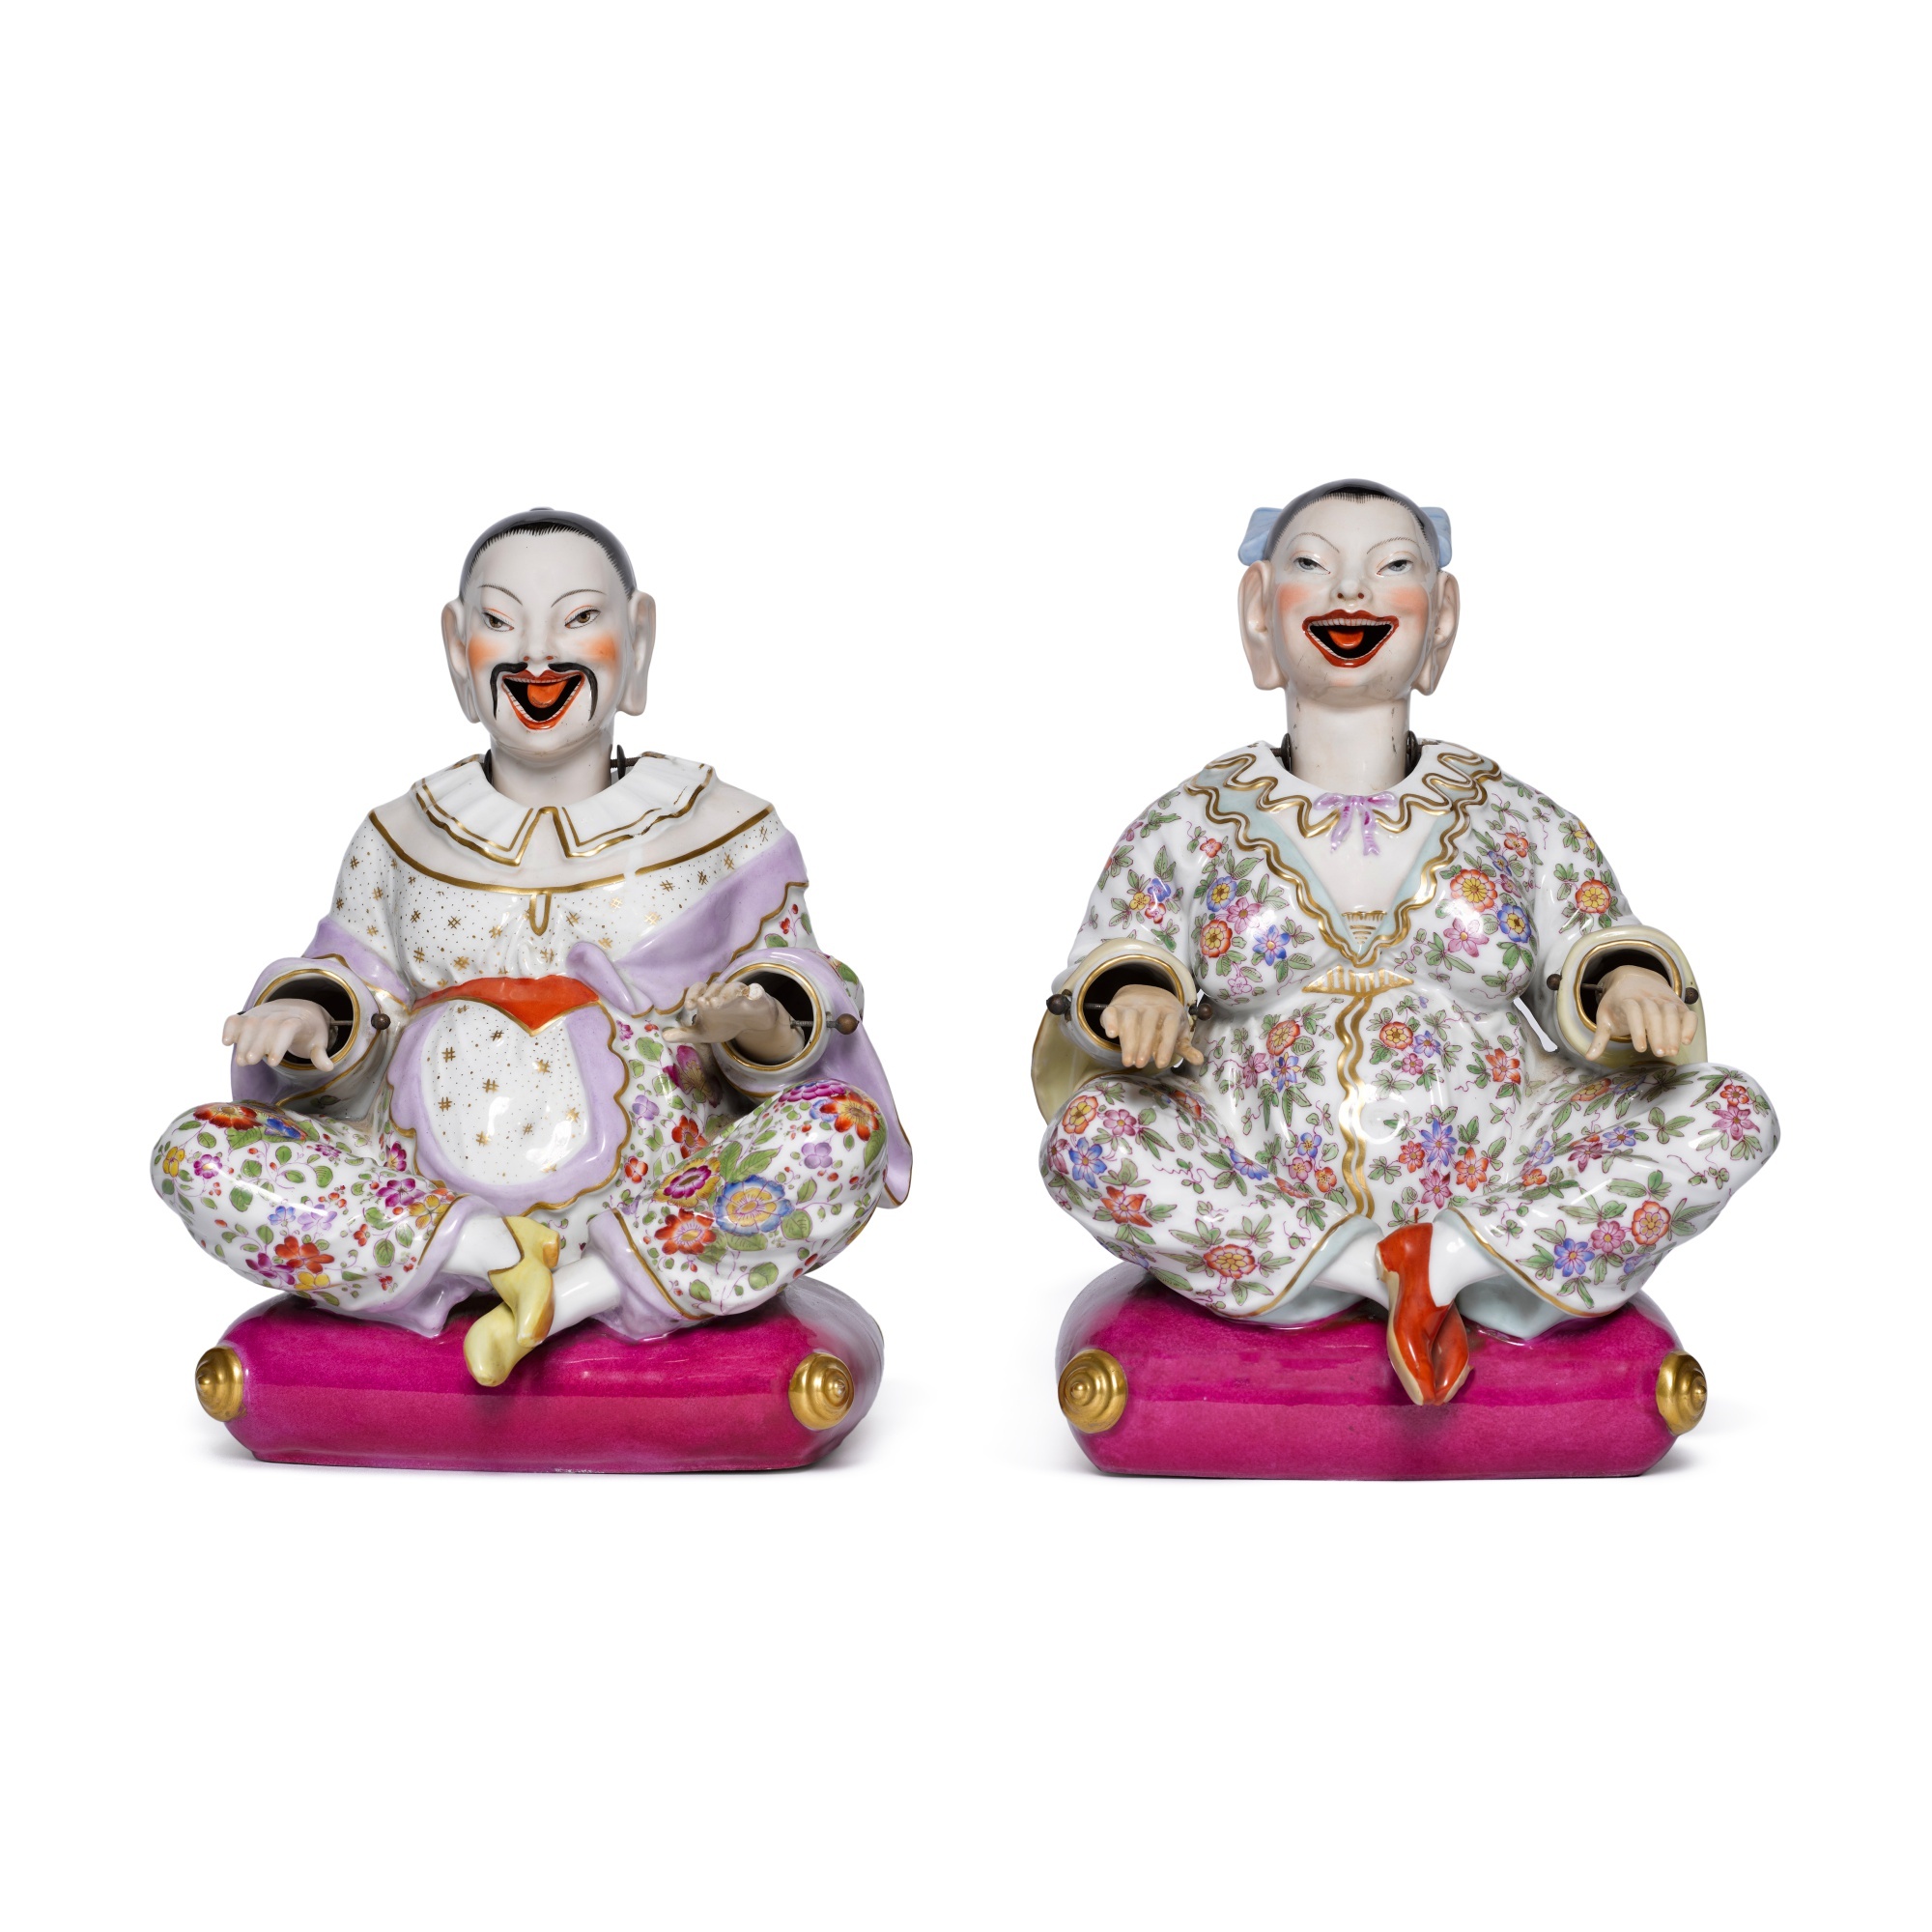 A Pair of French Porcelain Nodding Pagoda Figures, Circa 1890